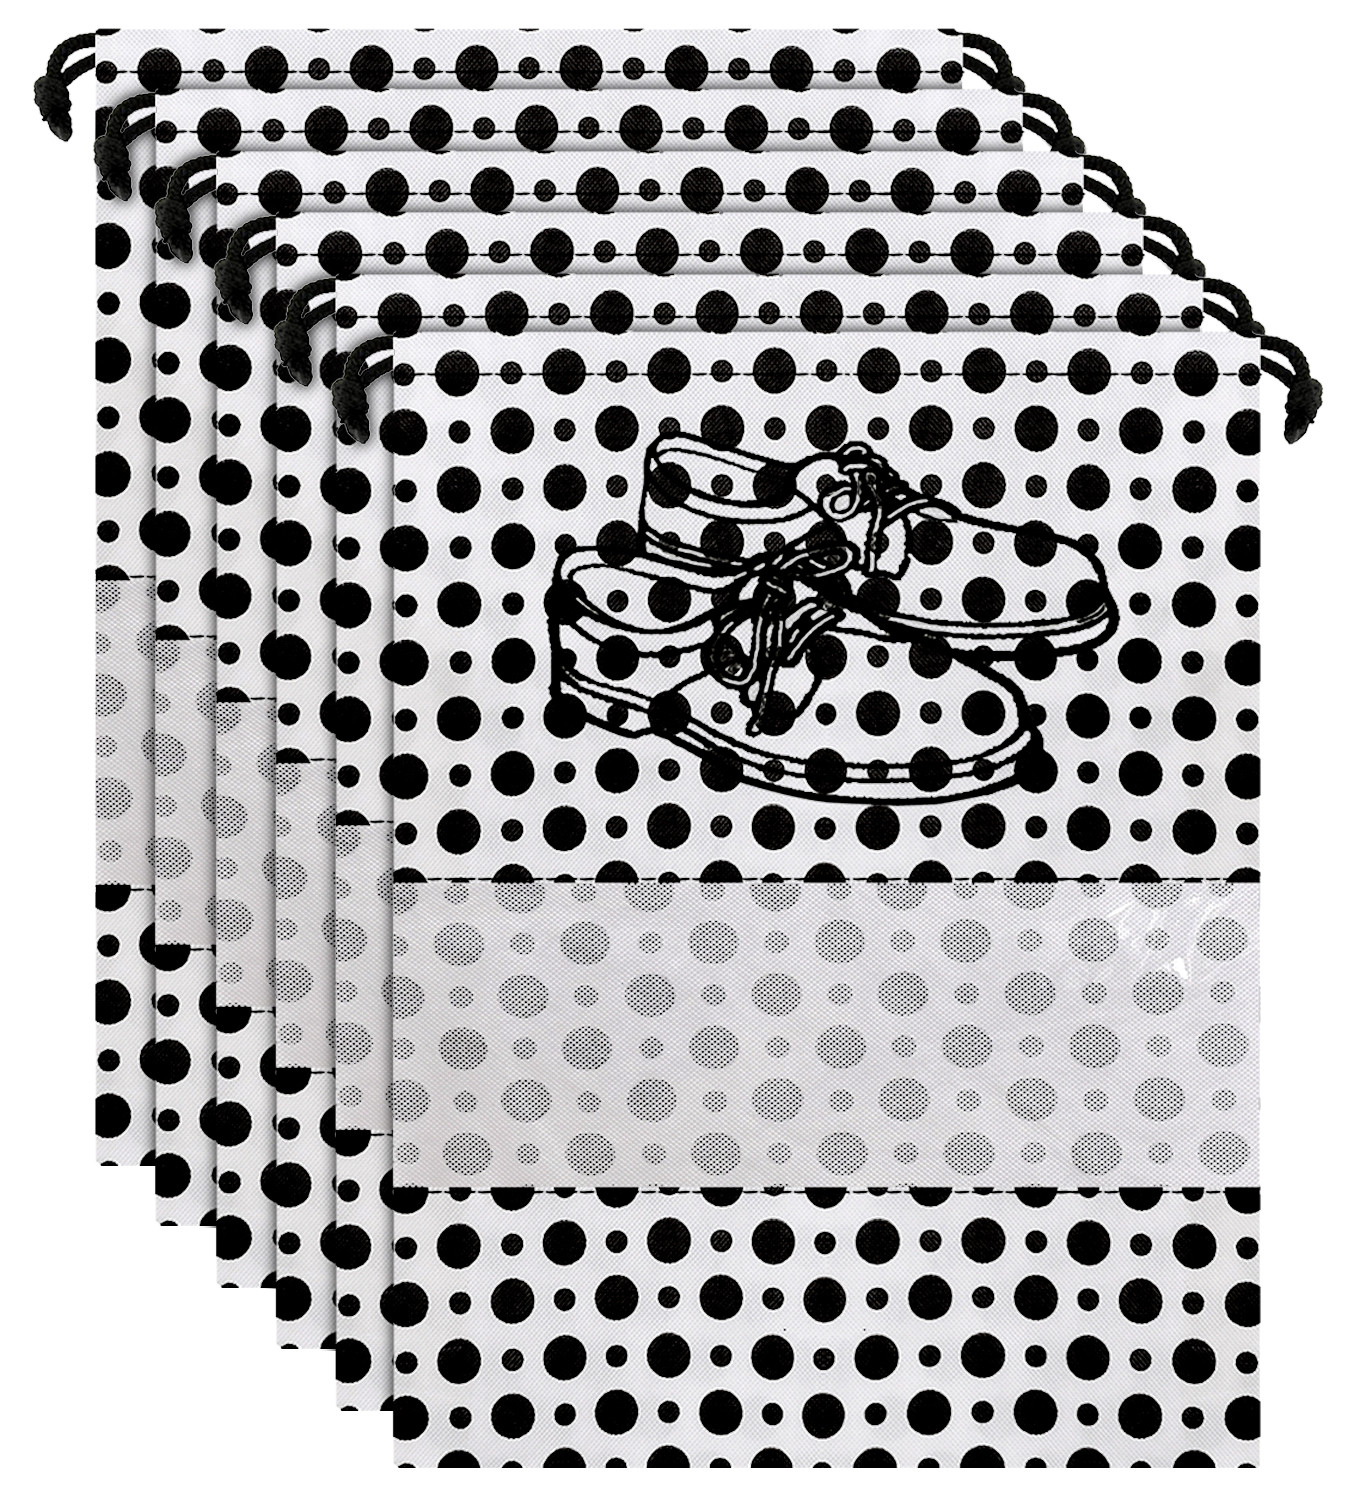 Kuber Industries Polka Dots Print Non Woven Travel Shoe Cover, String Bag Organizer (Black & White)